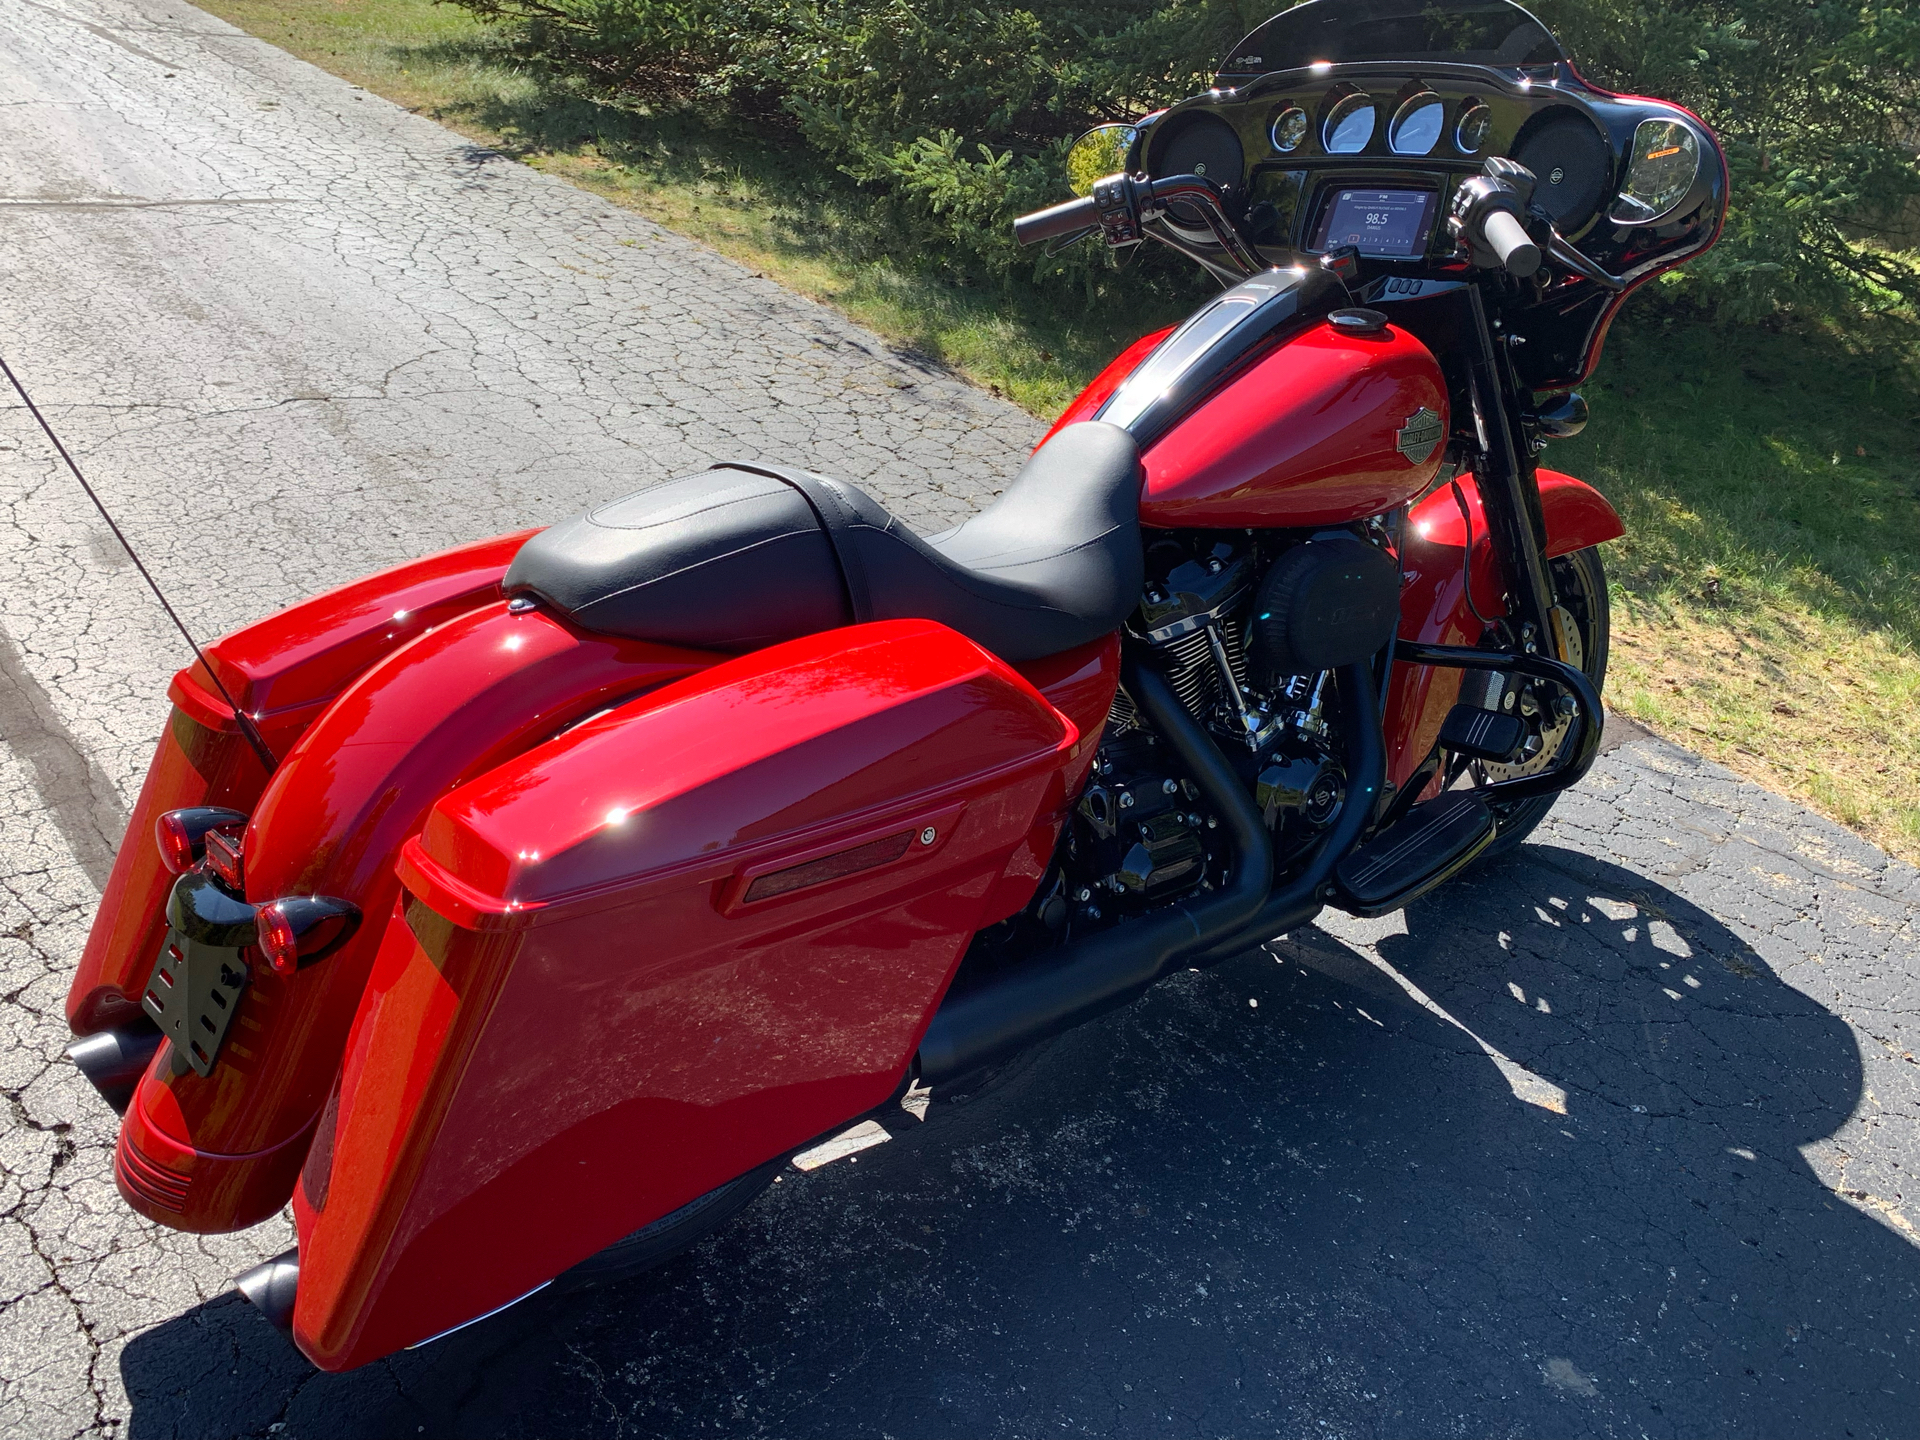 2022 Harley-Davidson Street Glide® Special in Portage, Michigan - Photo 20